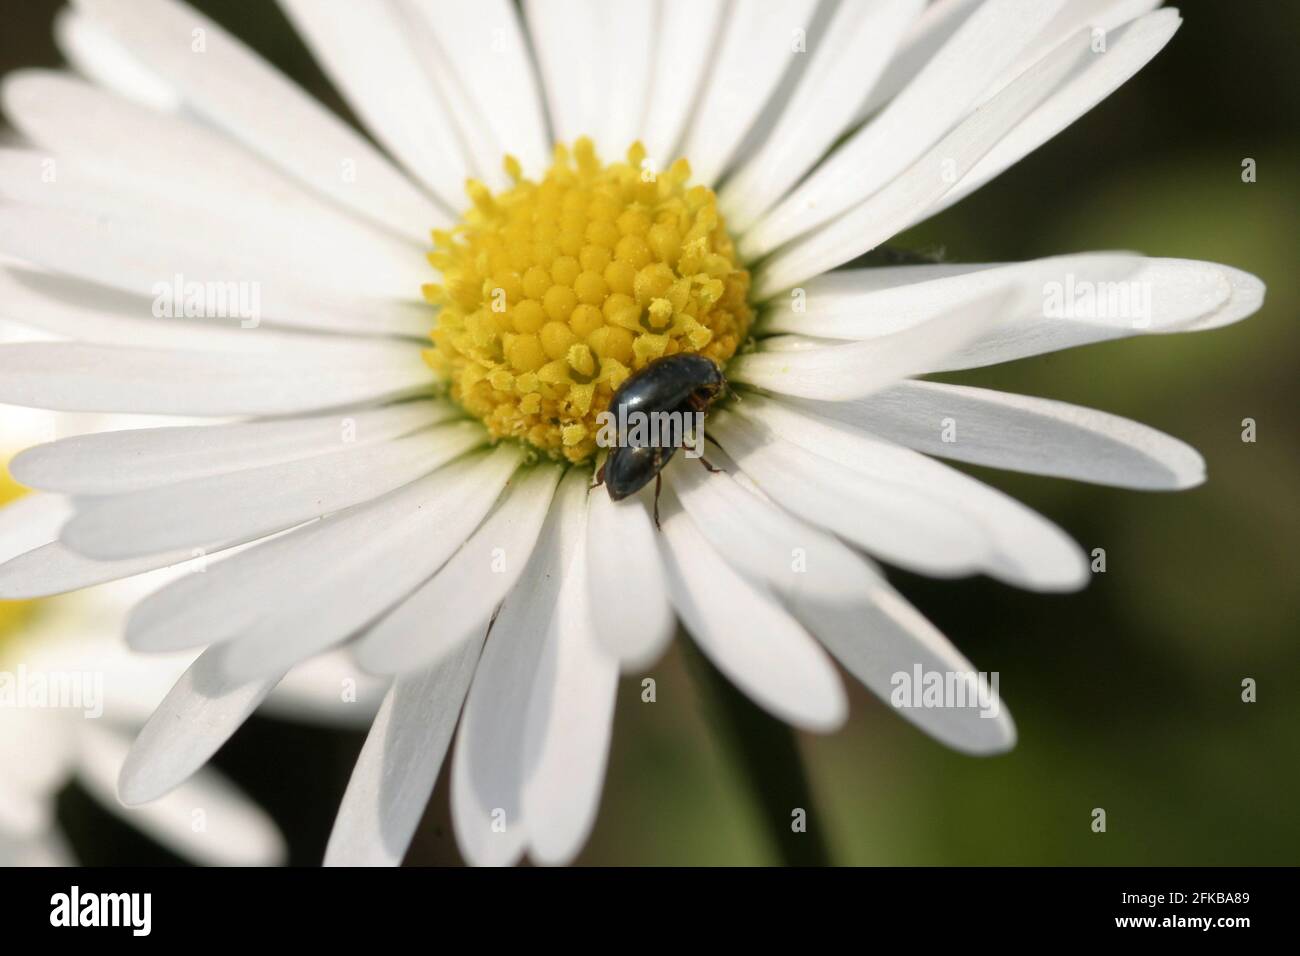 common daisy, lawn daisy, English daisy (Bellis perennis), flower head with beetle, Austria Stock Photo